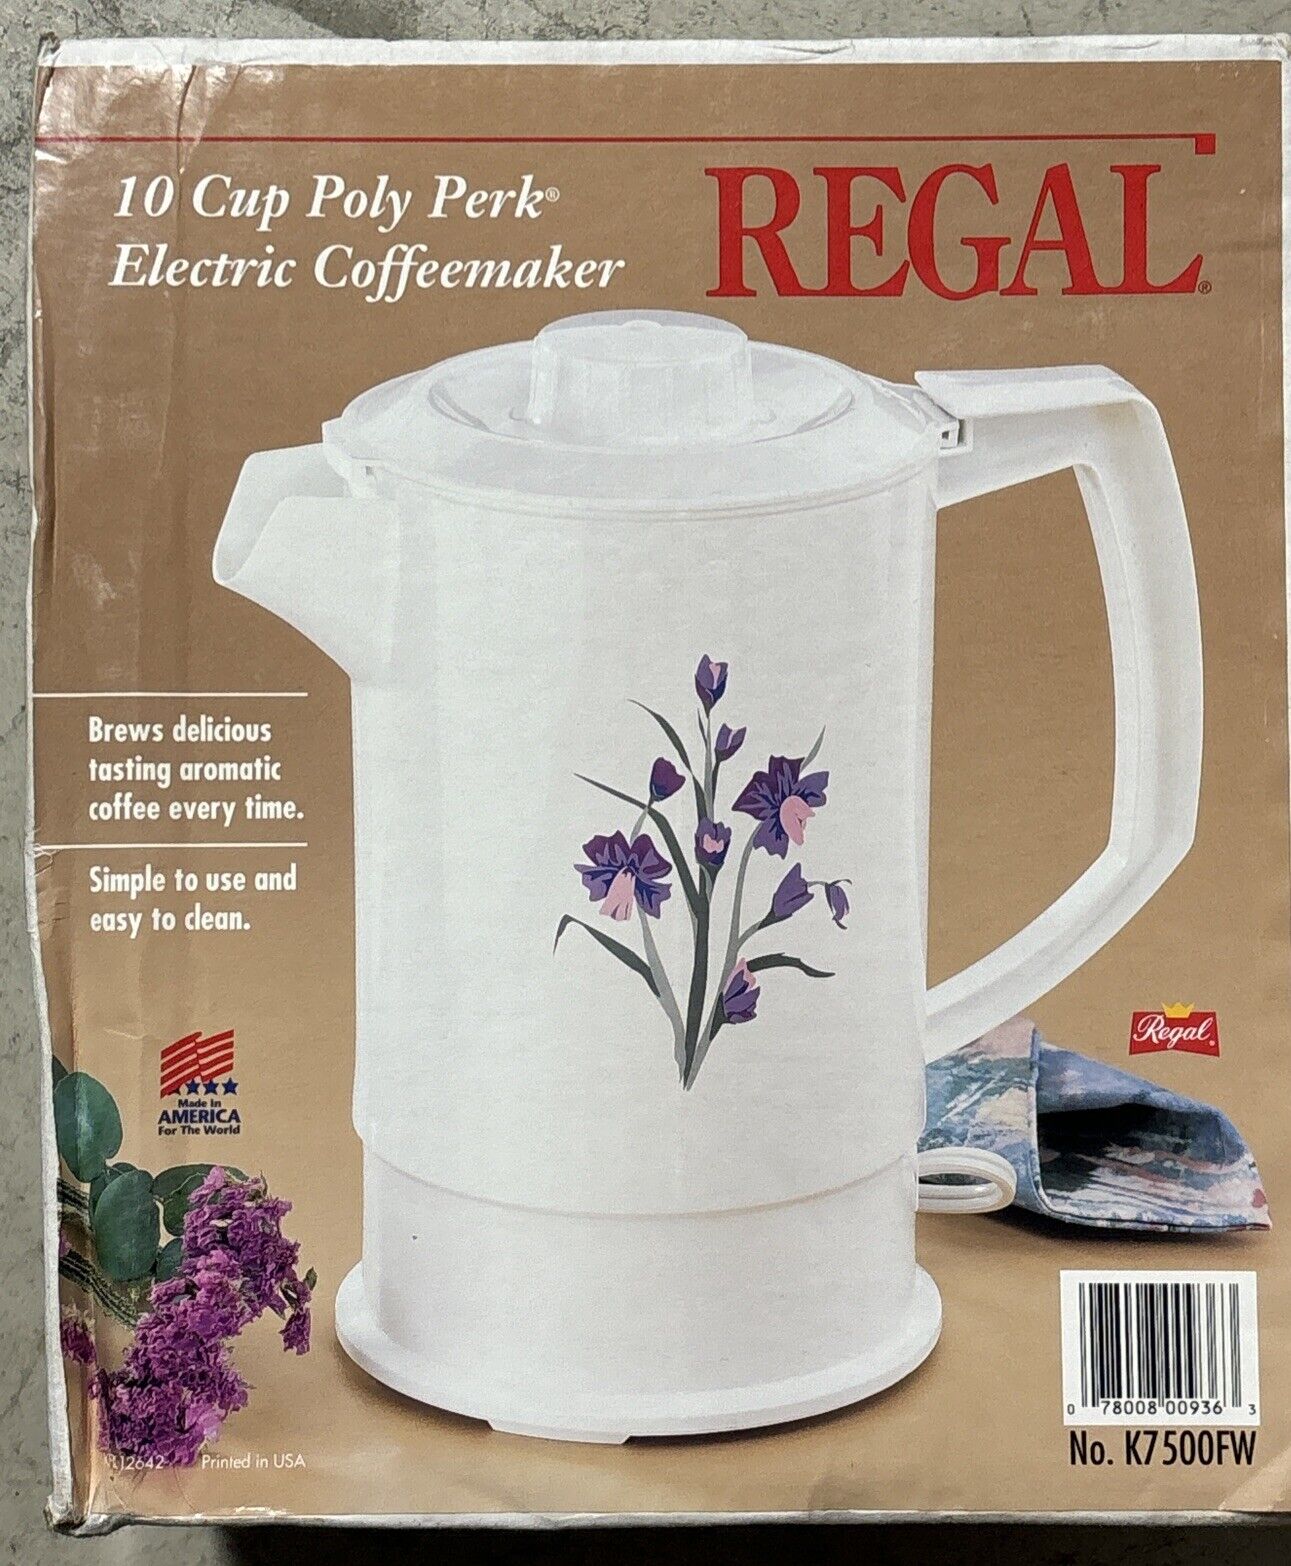 Vintage Regal Coffeemaker Poly Perk Electric Percolator 10 Cup Iris K7500FW NIB